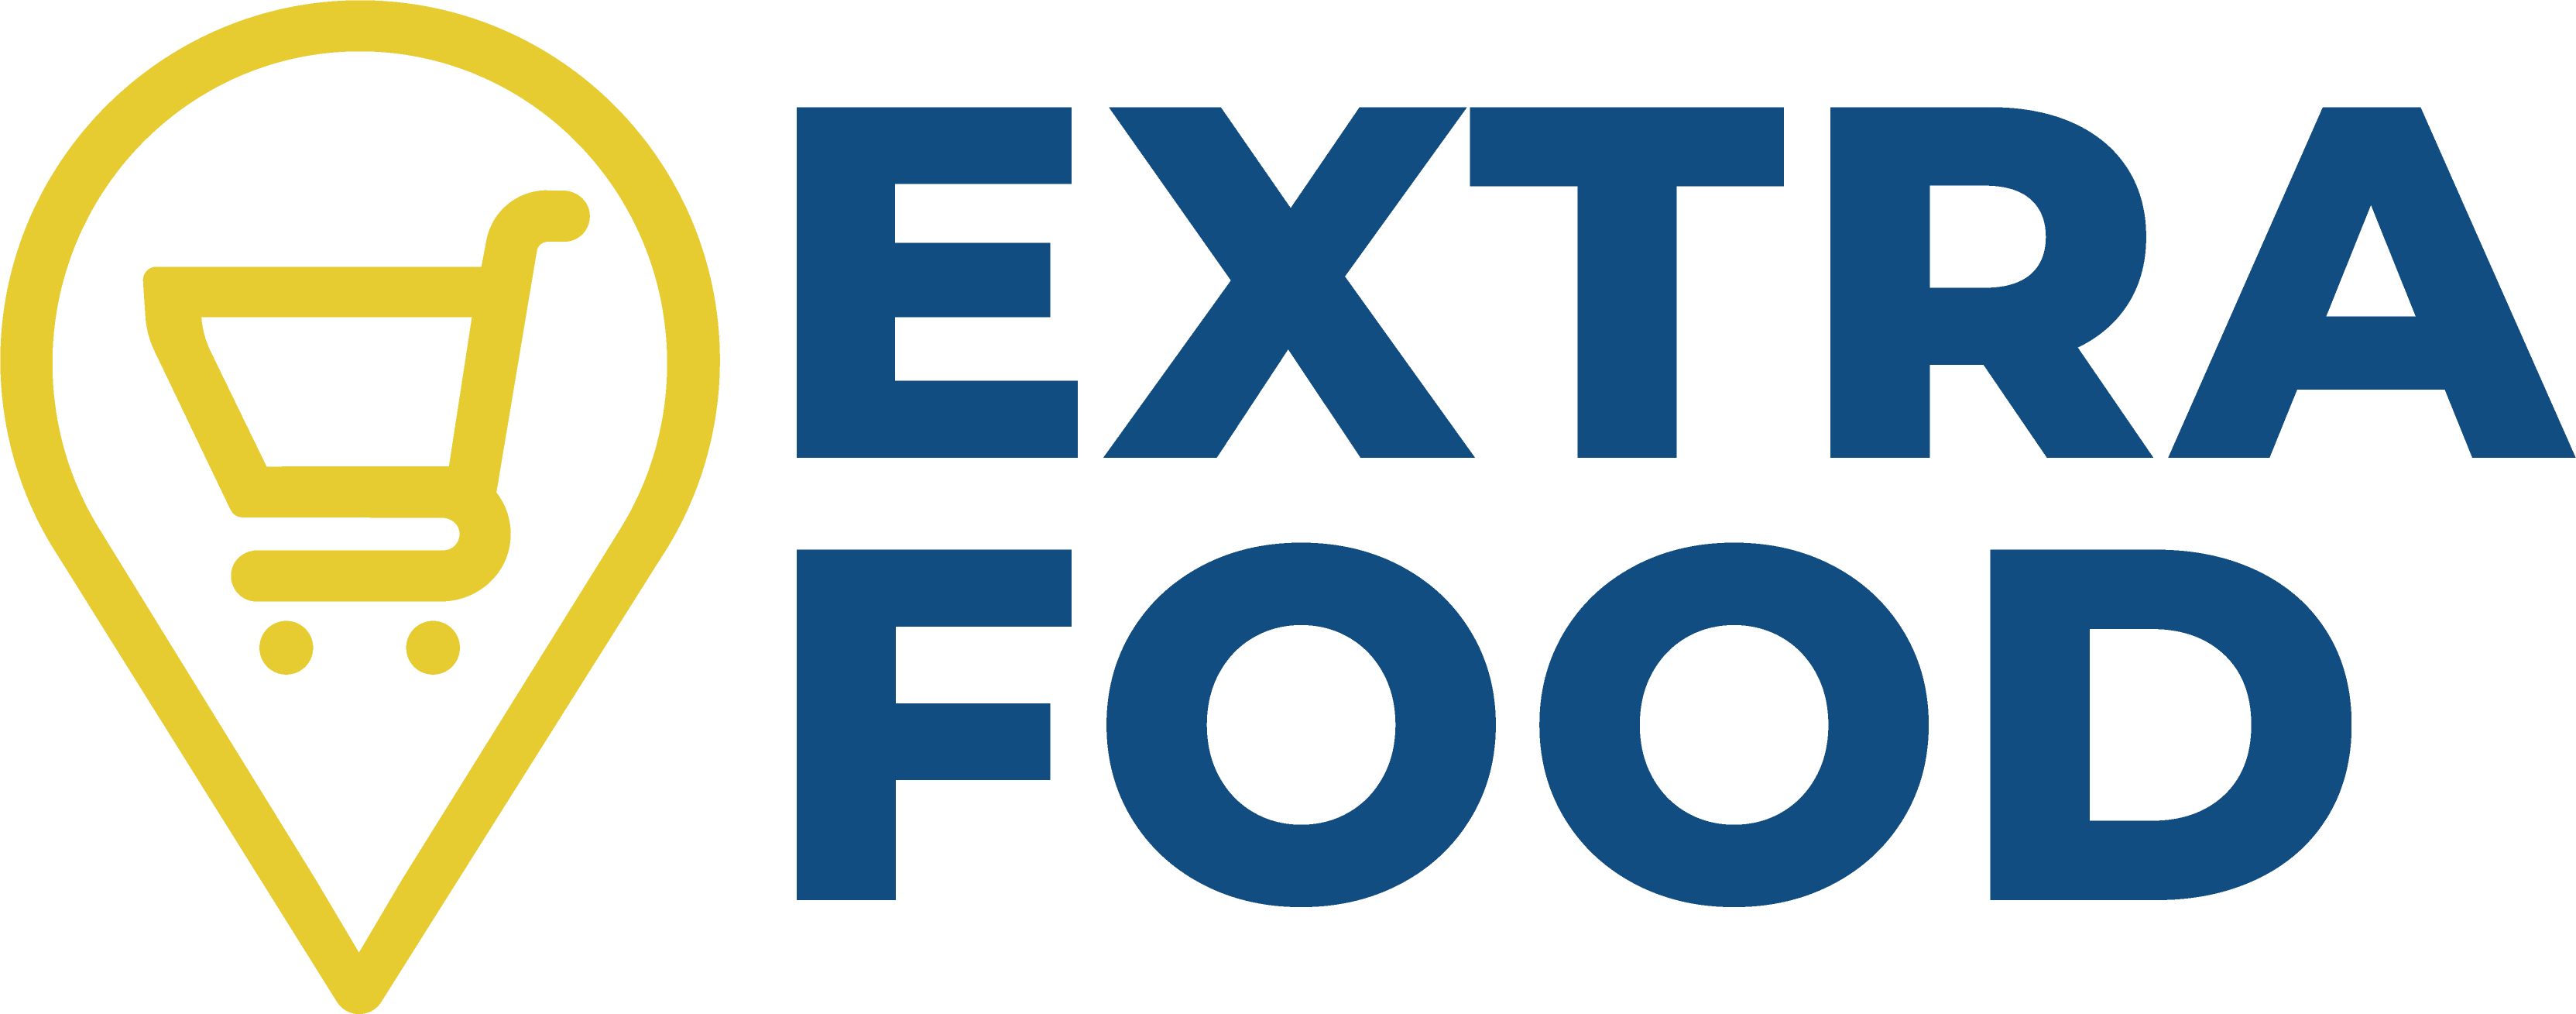 Logo Extra food Azul